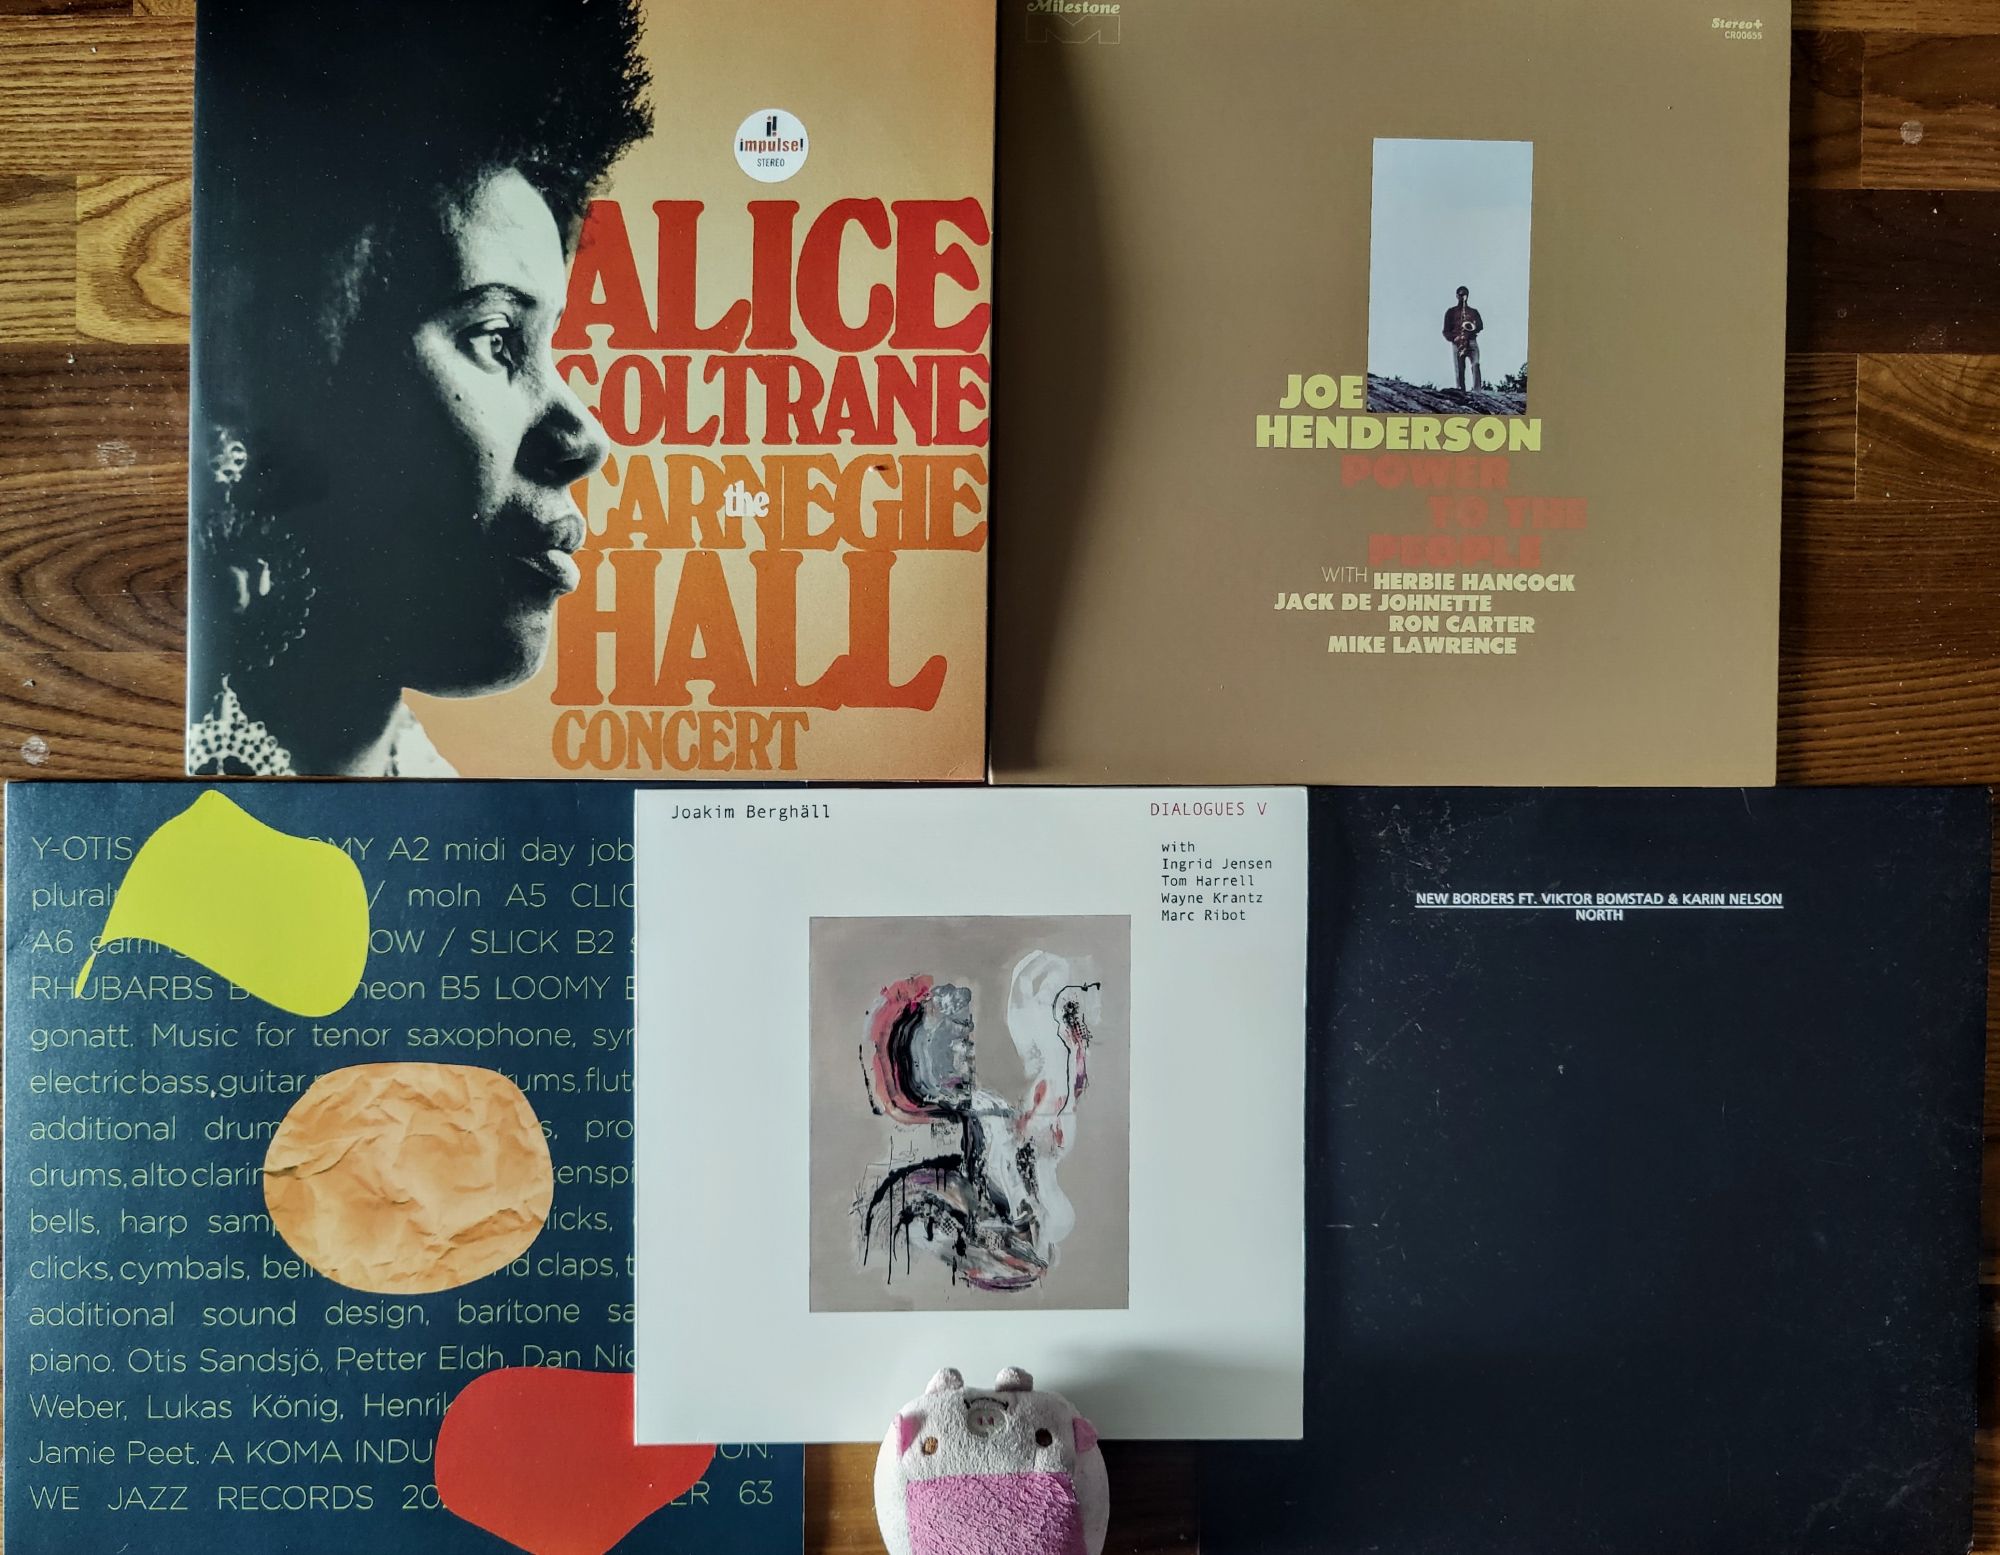 Vinyyliviisikko 3: Alice Coltrane, Joe Henderson, Joakim Berghäll, Y-Otis, New Borders